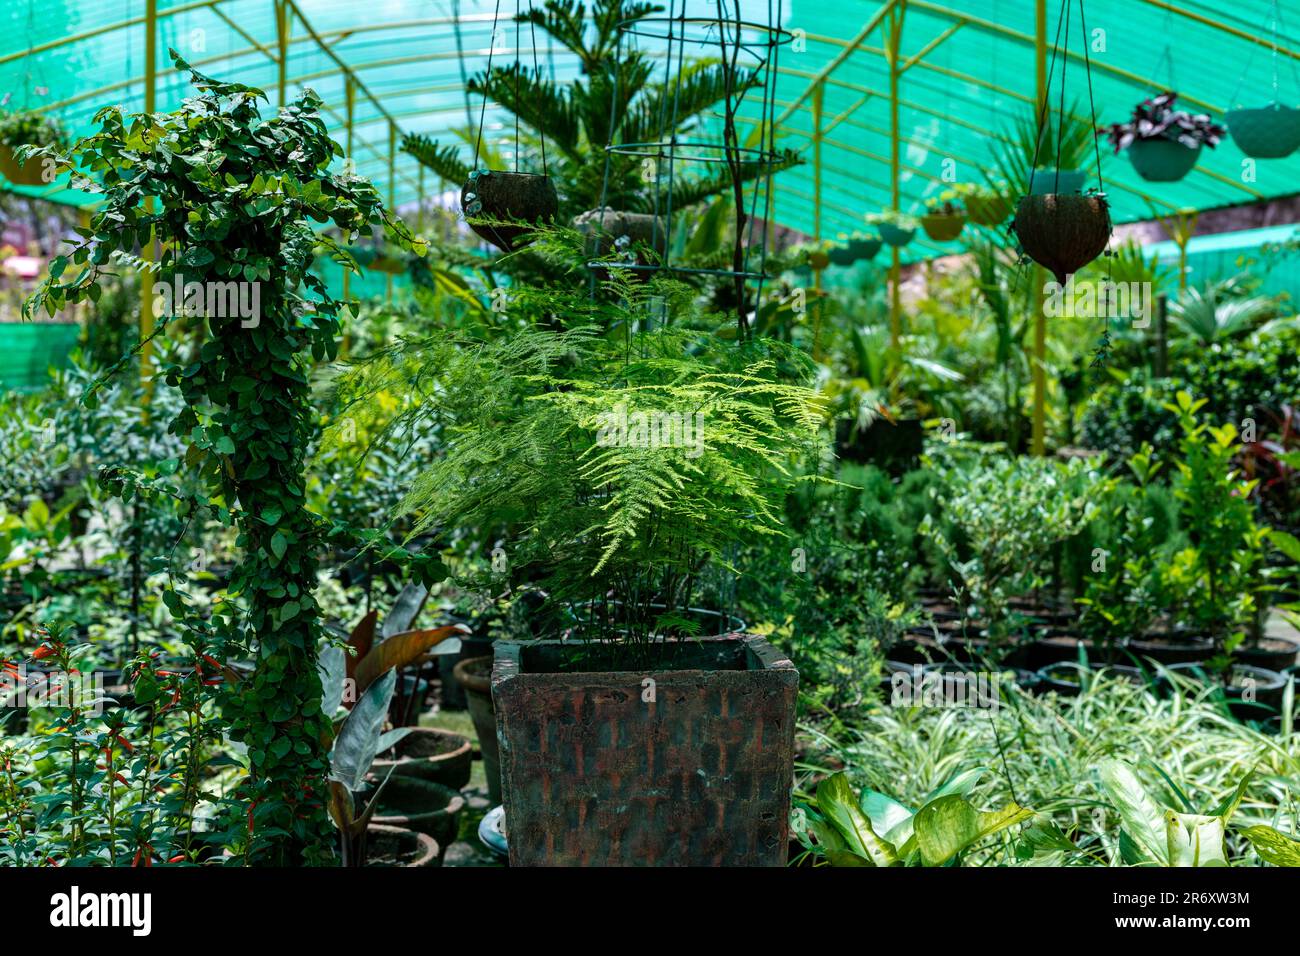 Plumosa fern beautiful plant in a greenhouse Stock Photo